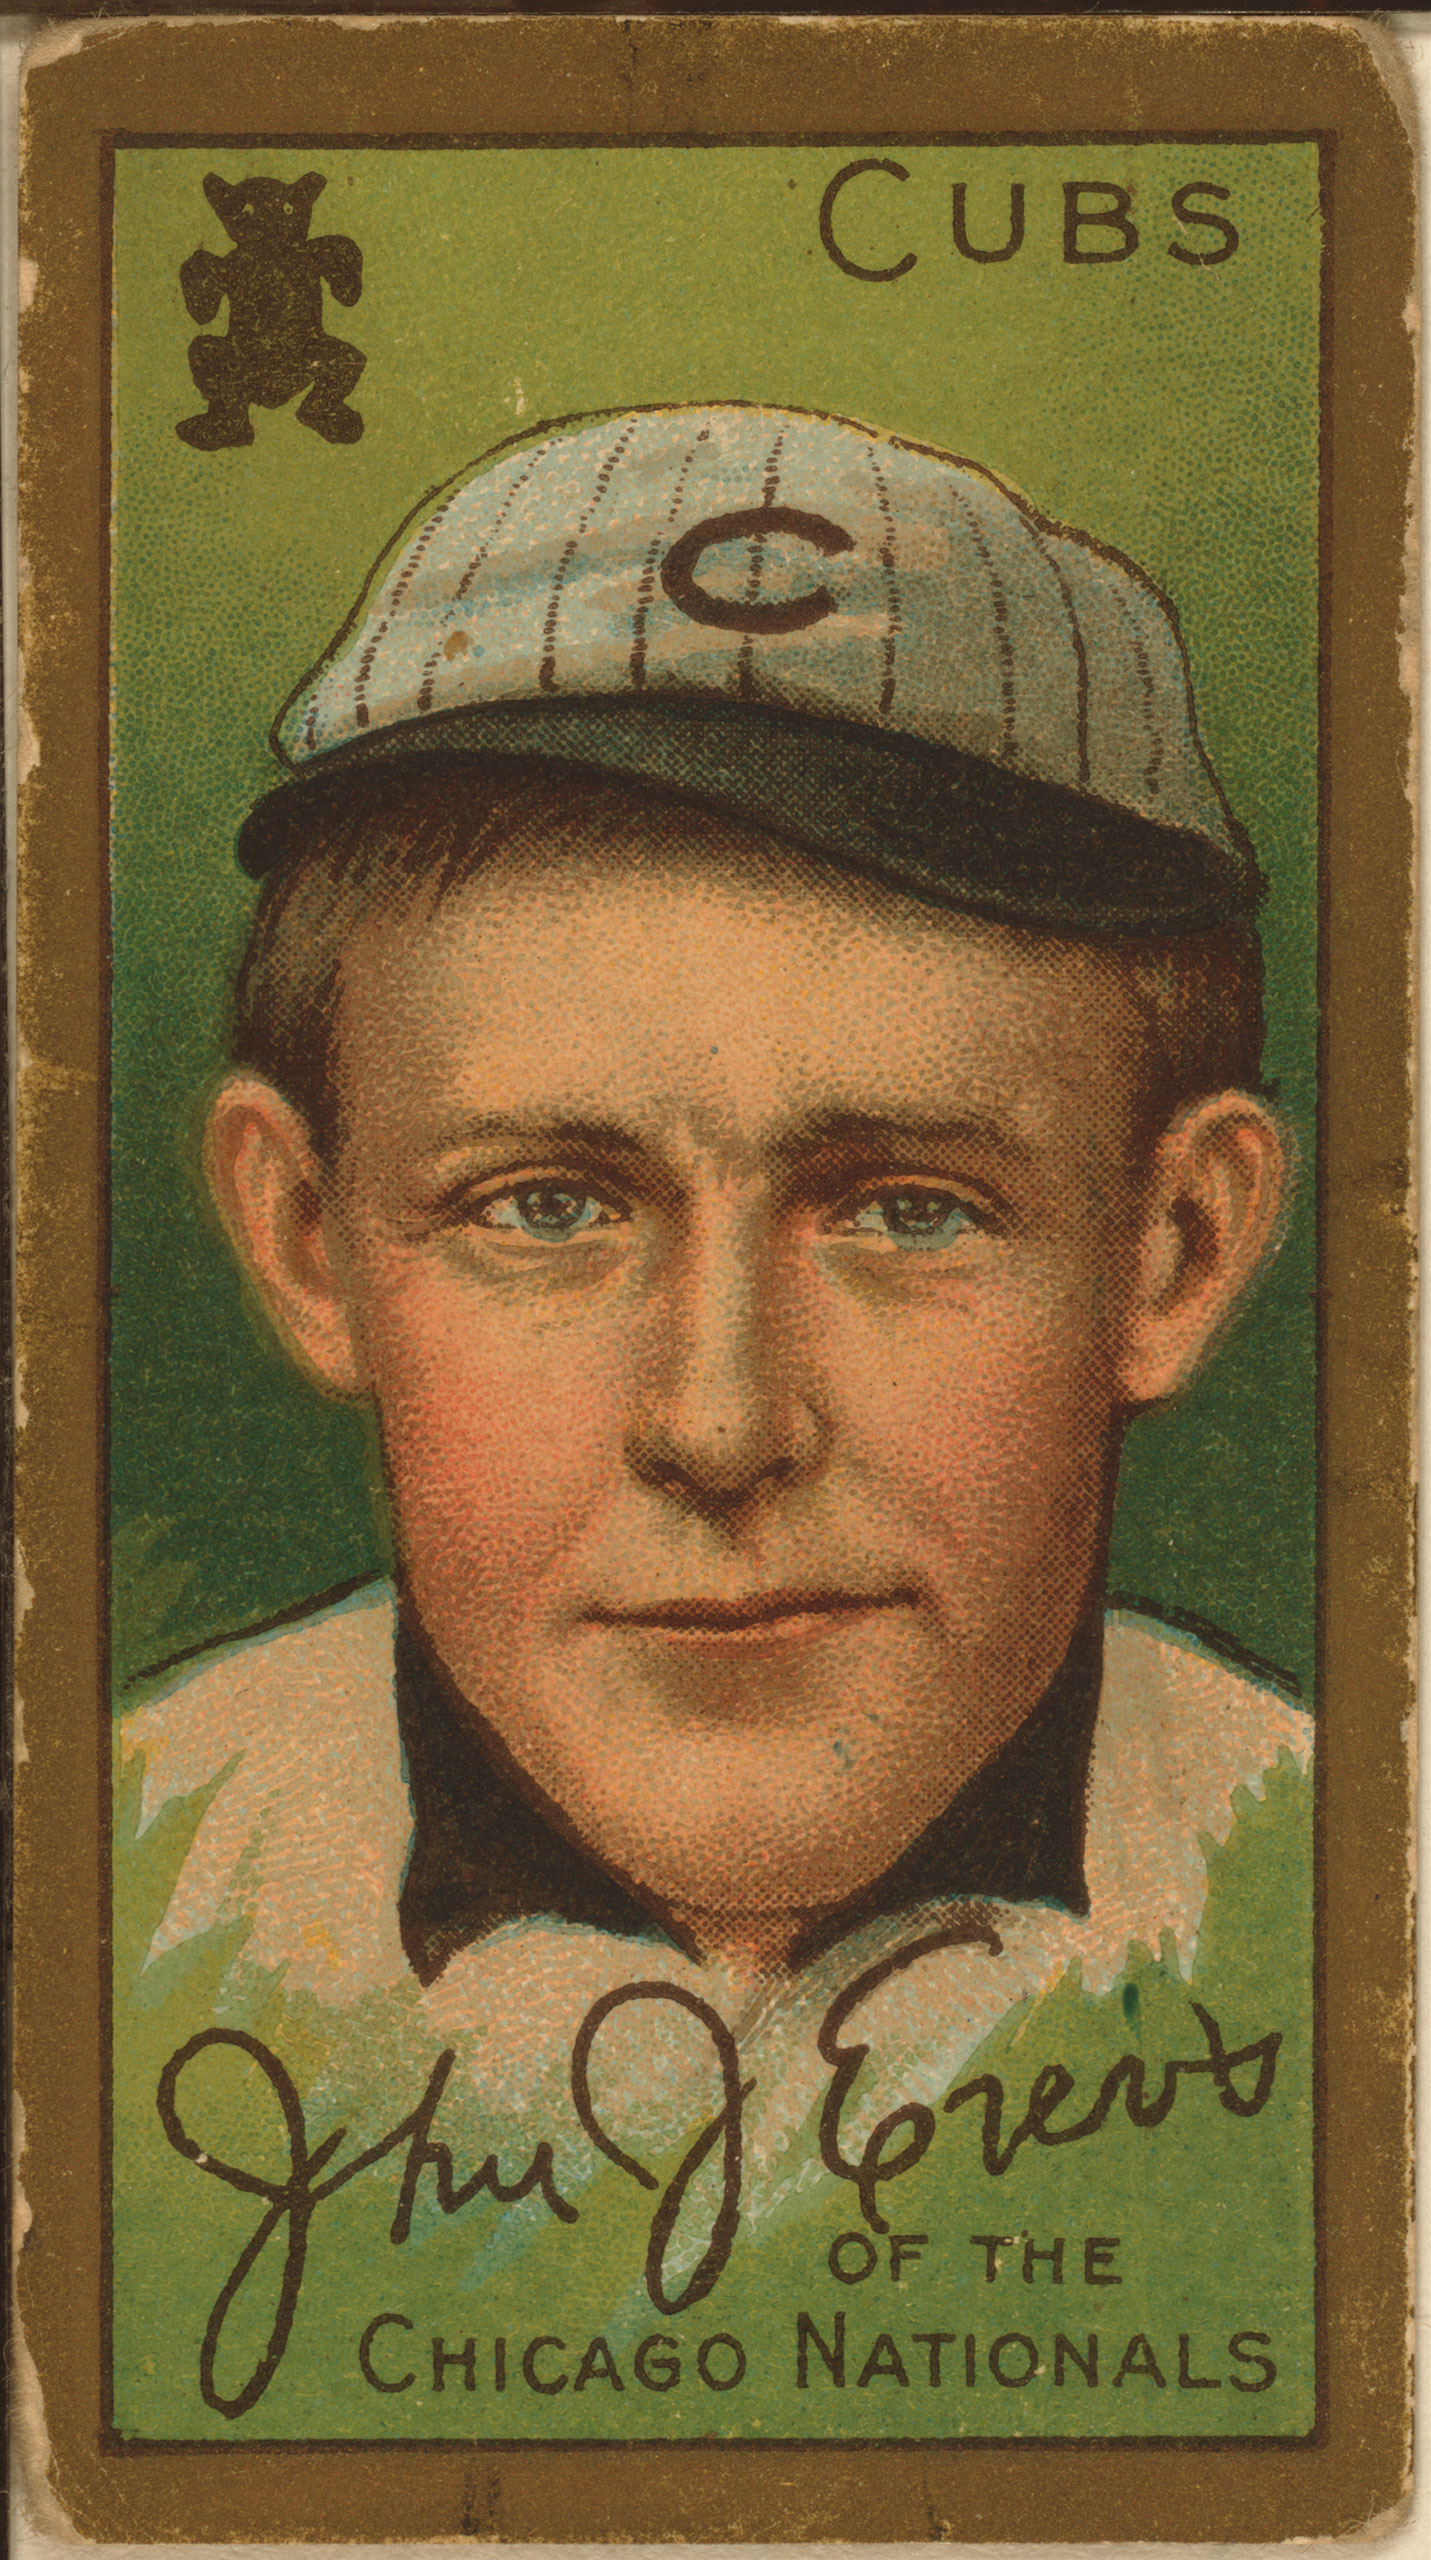 John J. Evers, Chicago Cubs, baseball card, 1911.